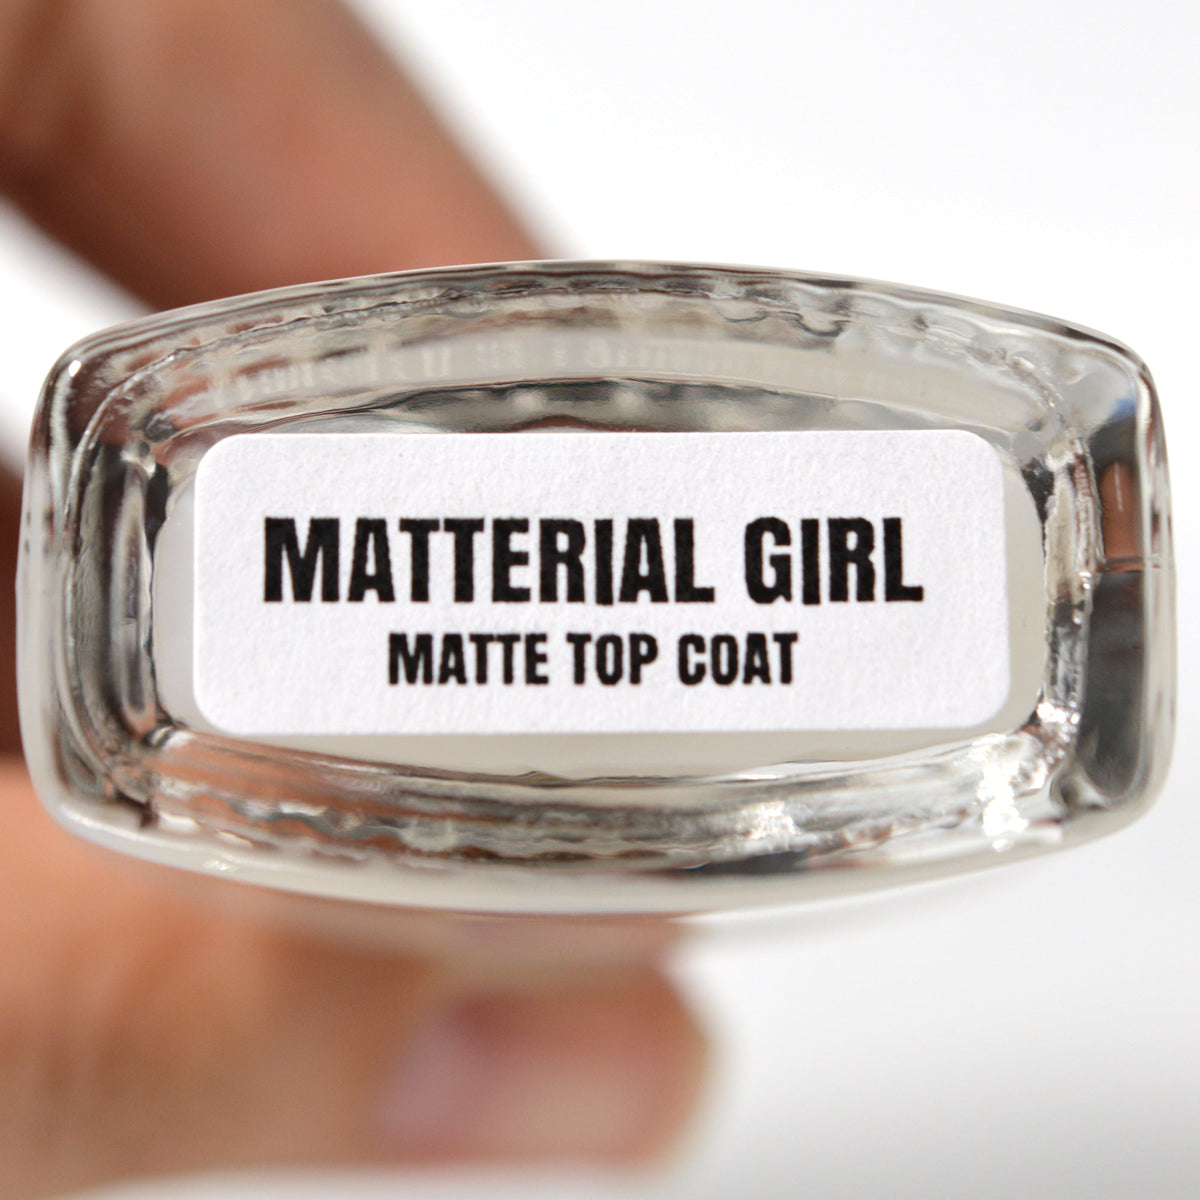 Matterial Girl Matte Top Coat - Nail Polish - BLUSH